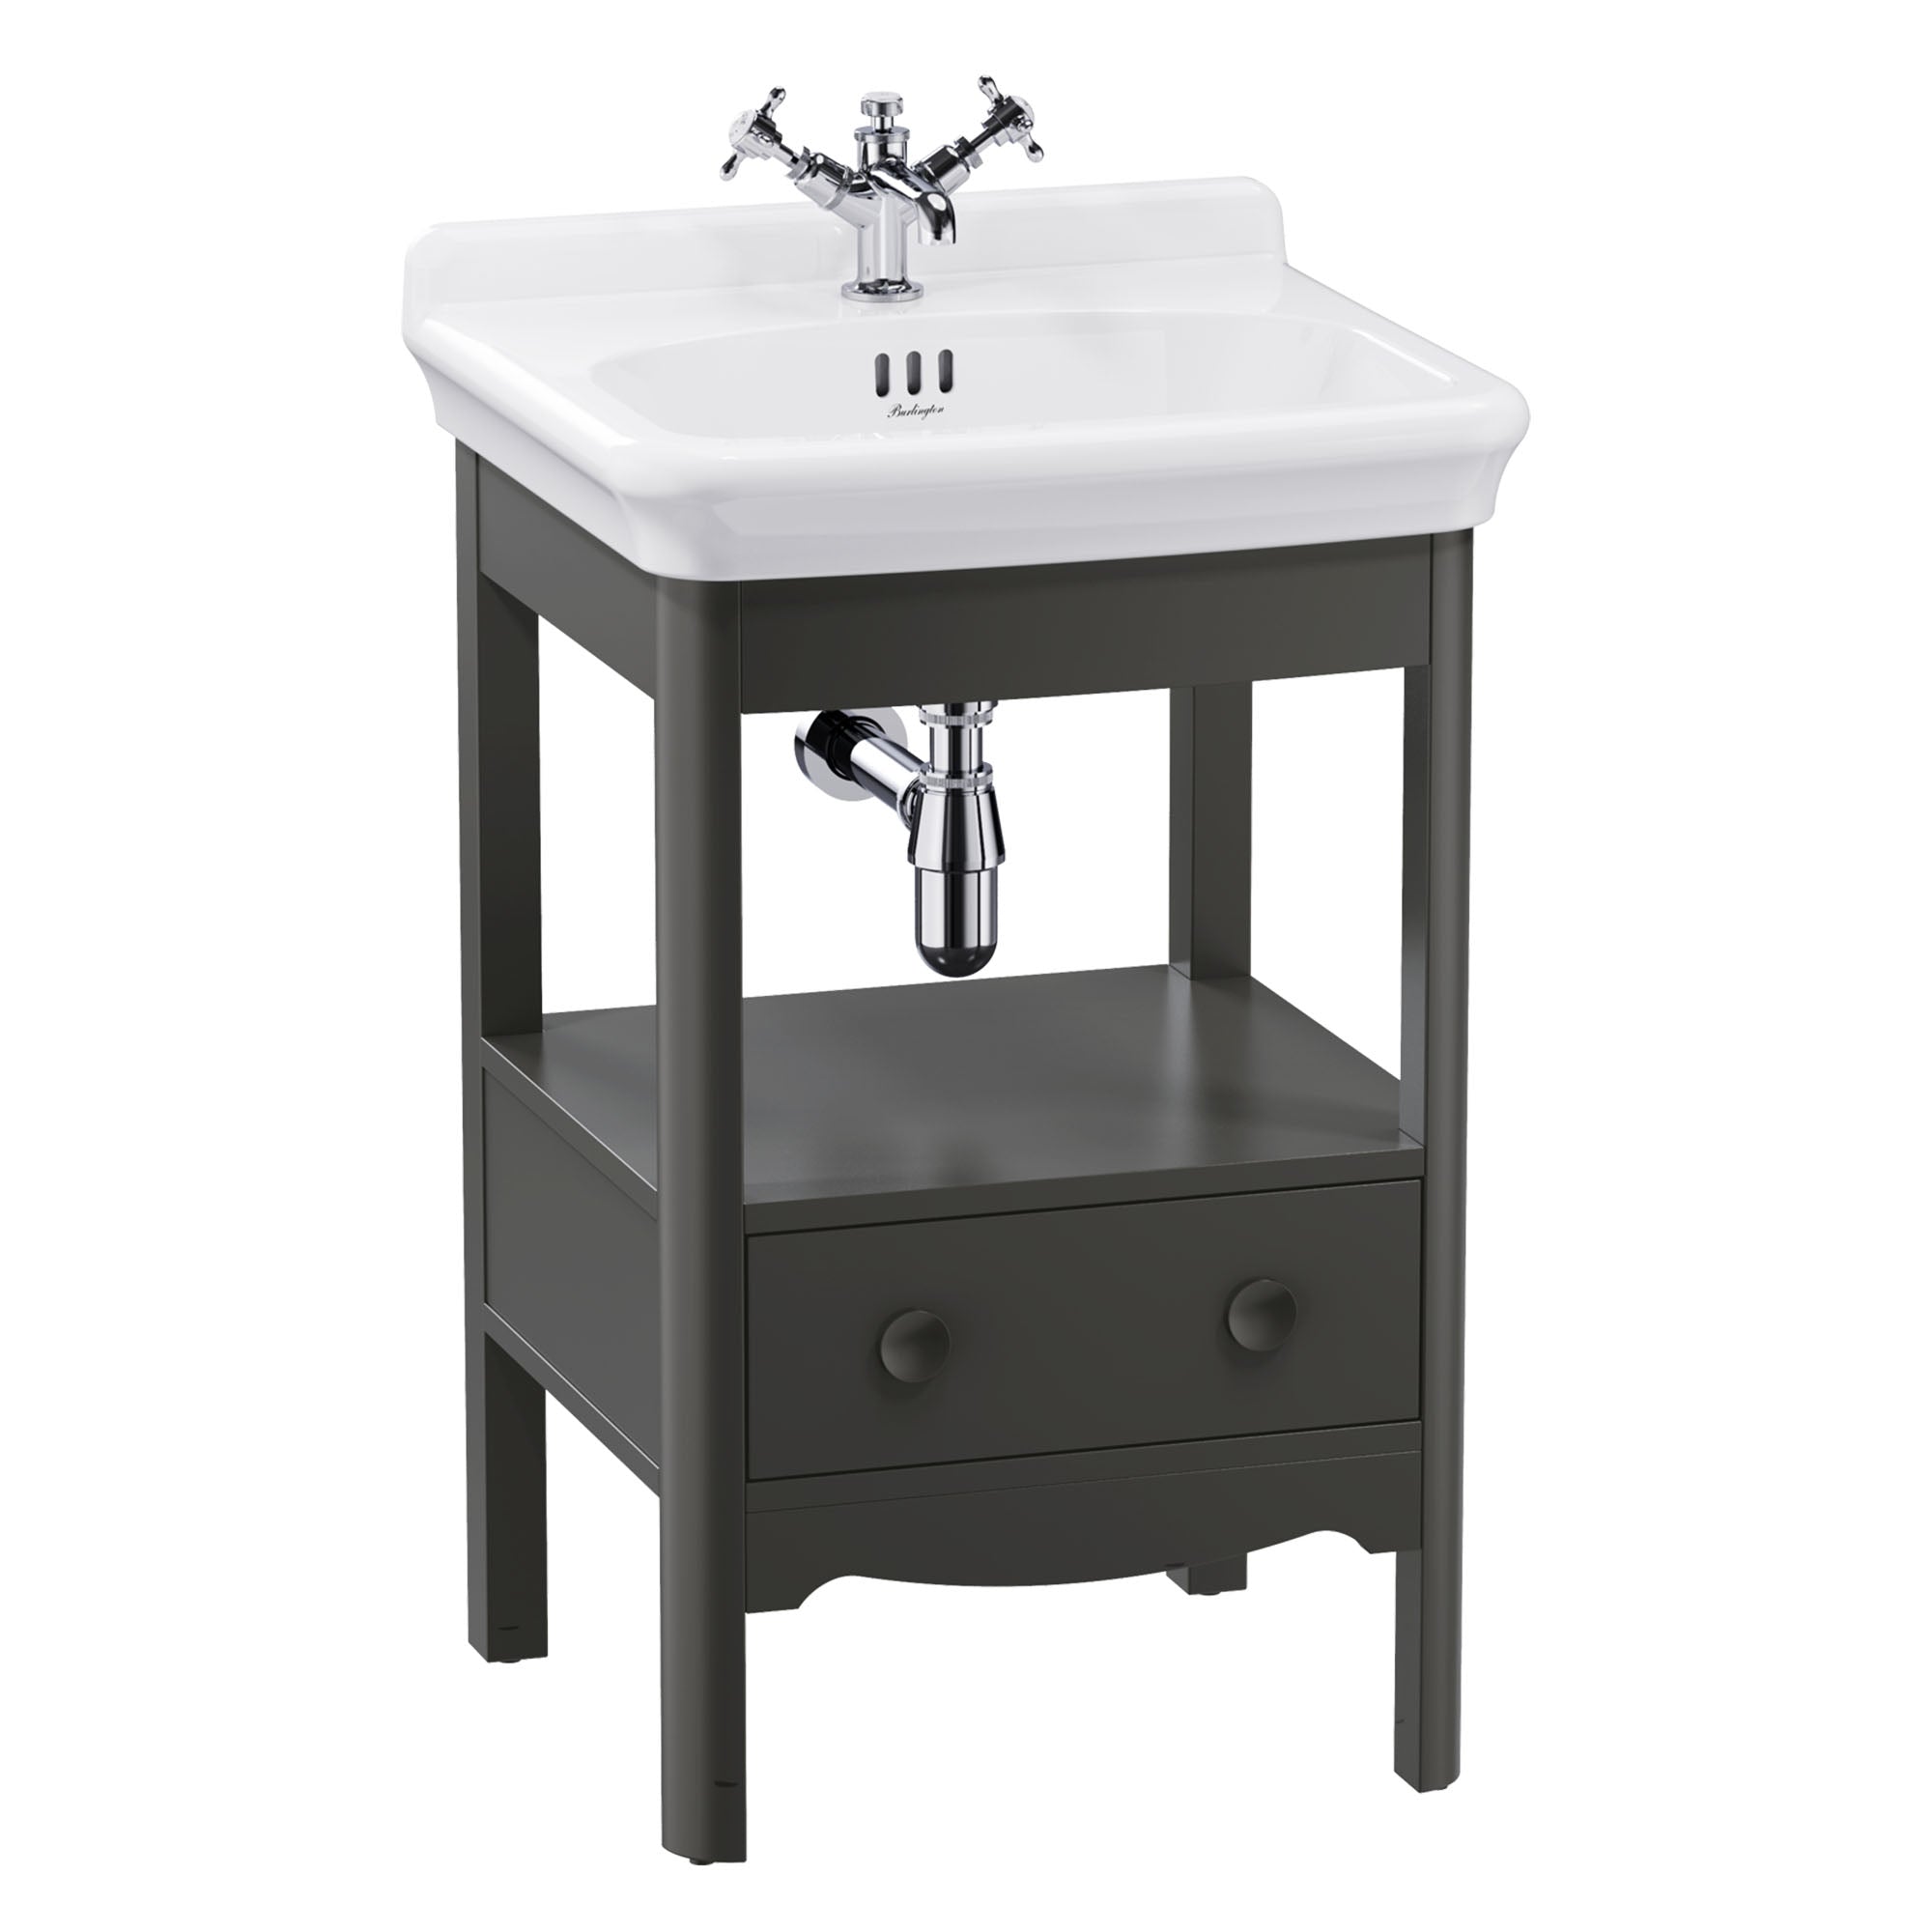 burlington guild 560 floorstanding single drawer vanity unit washbasin ashbee grey